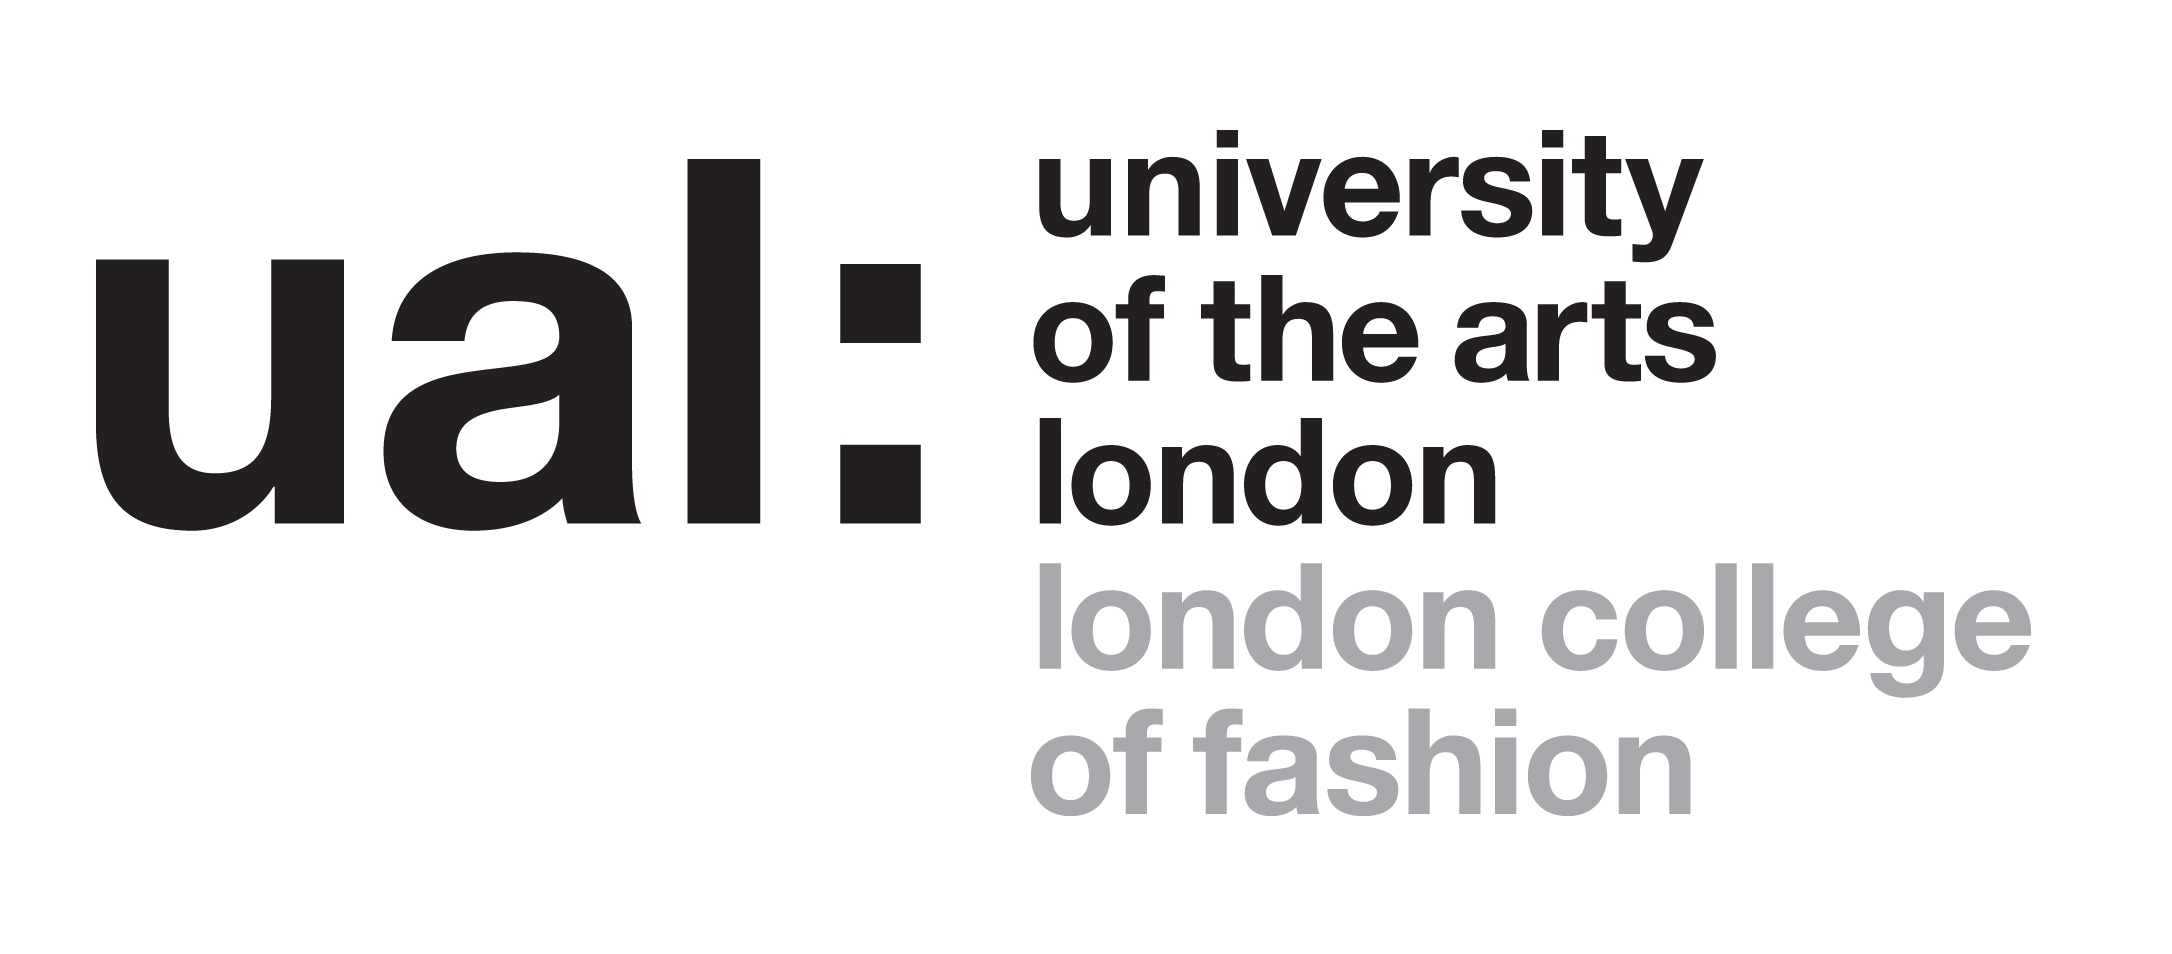 S716_London_College_of_fashion_logo.jpg